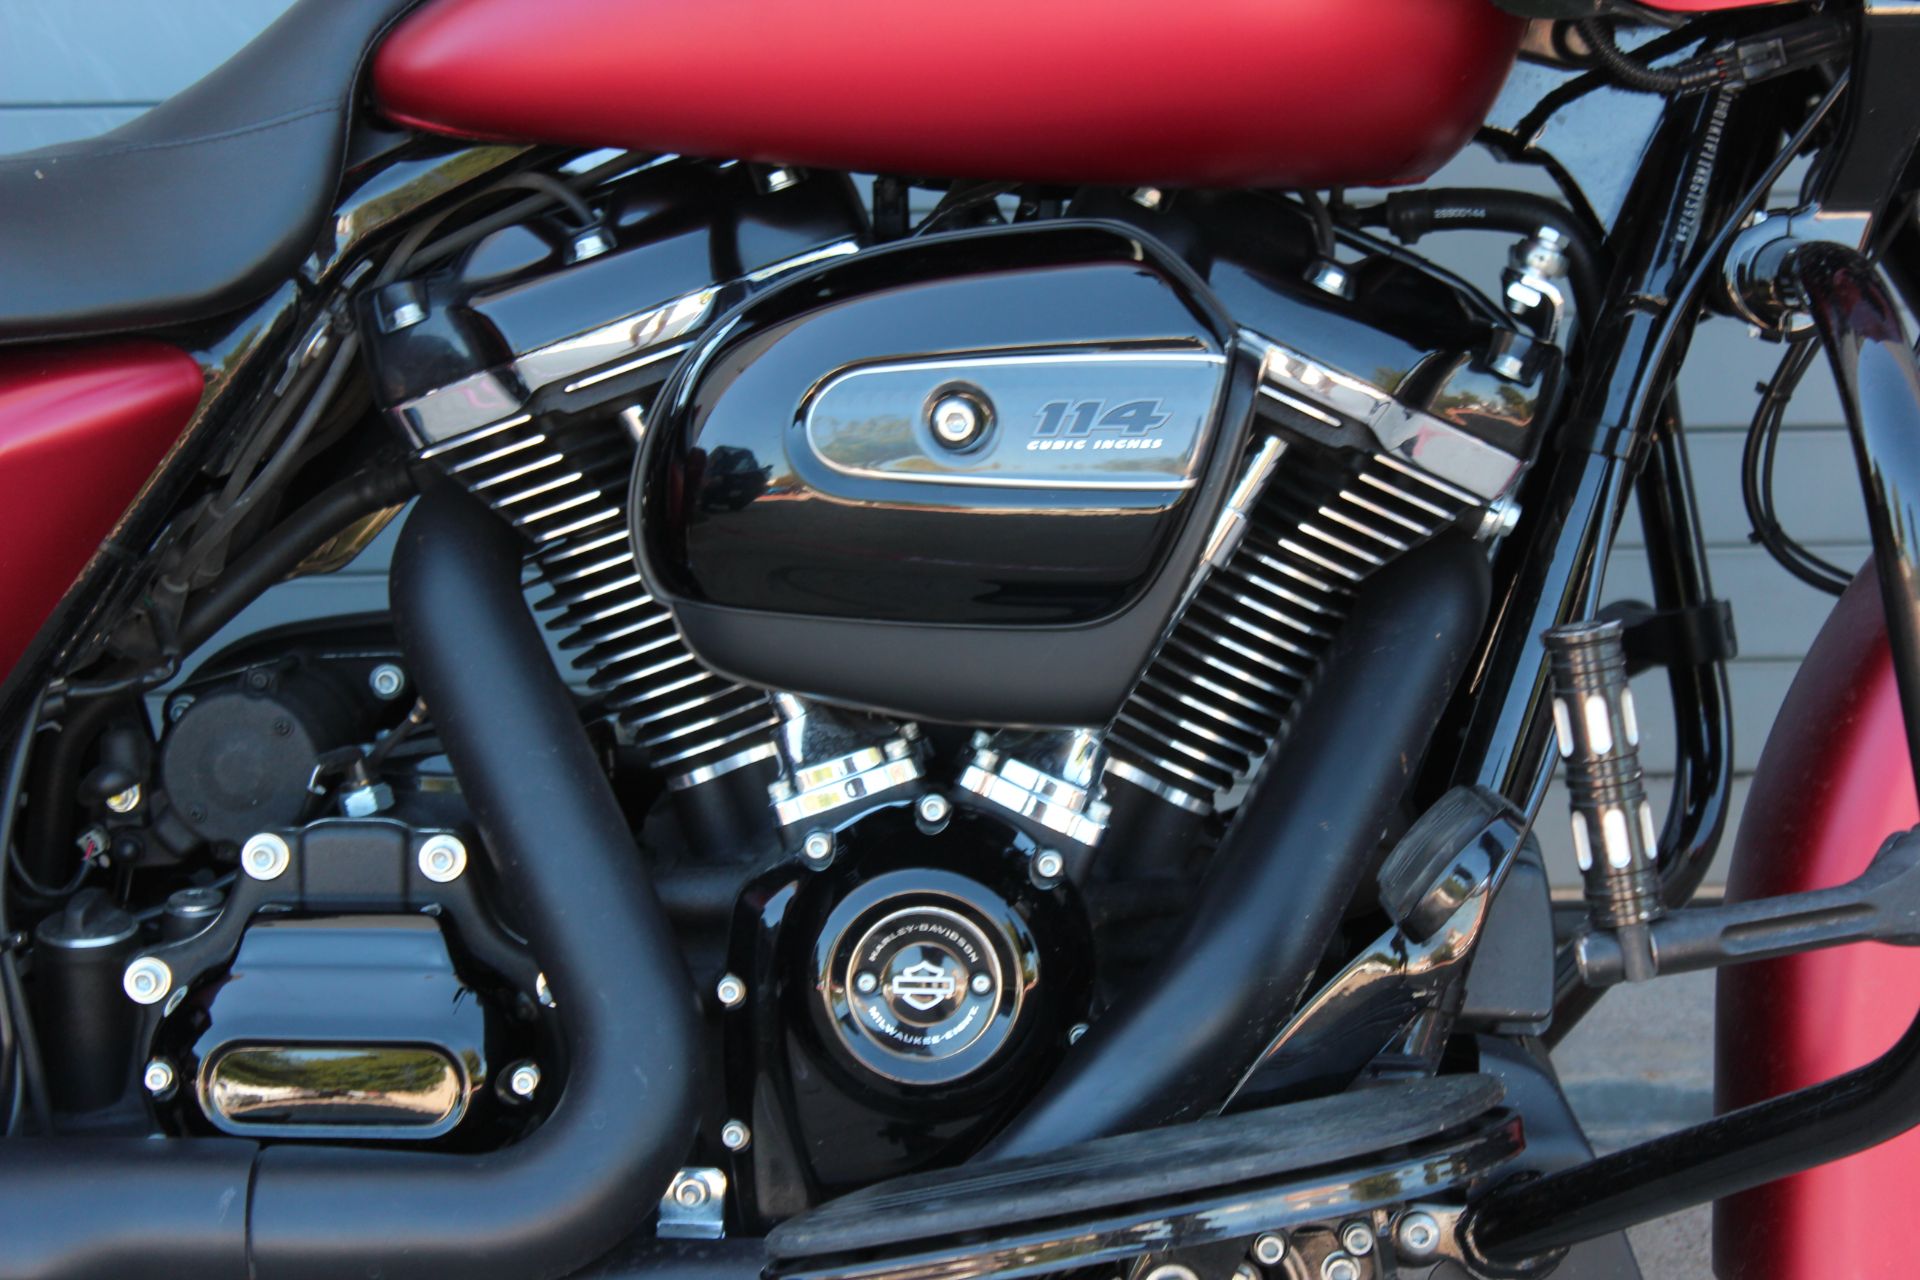 2019 Harley-Davidson Road Glide® Special in Grand Prairie, Texas - Photo 7